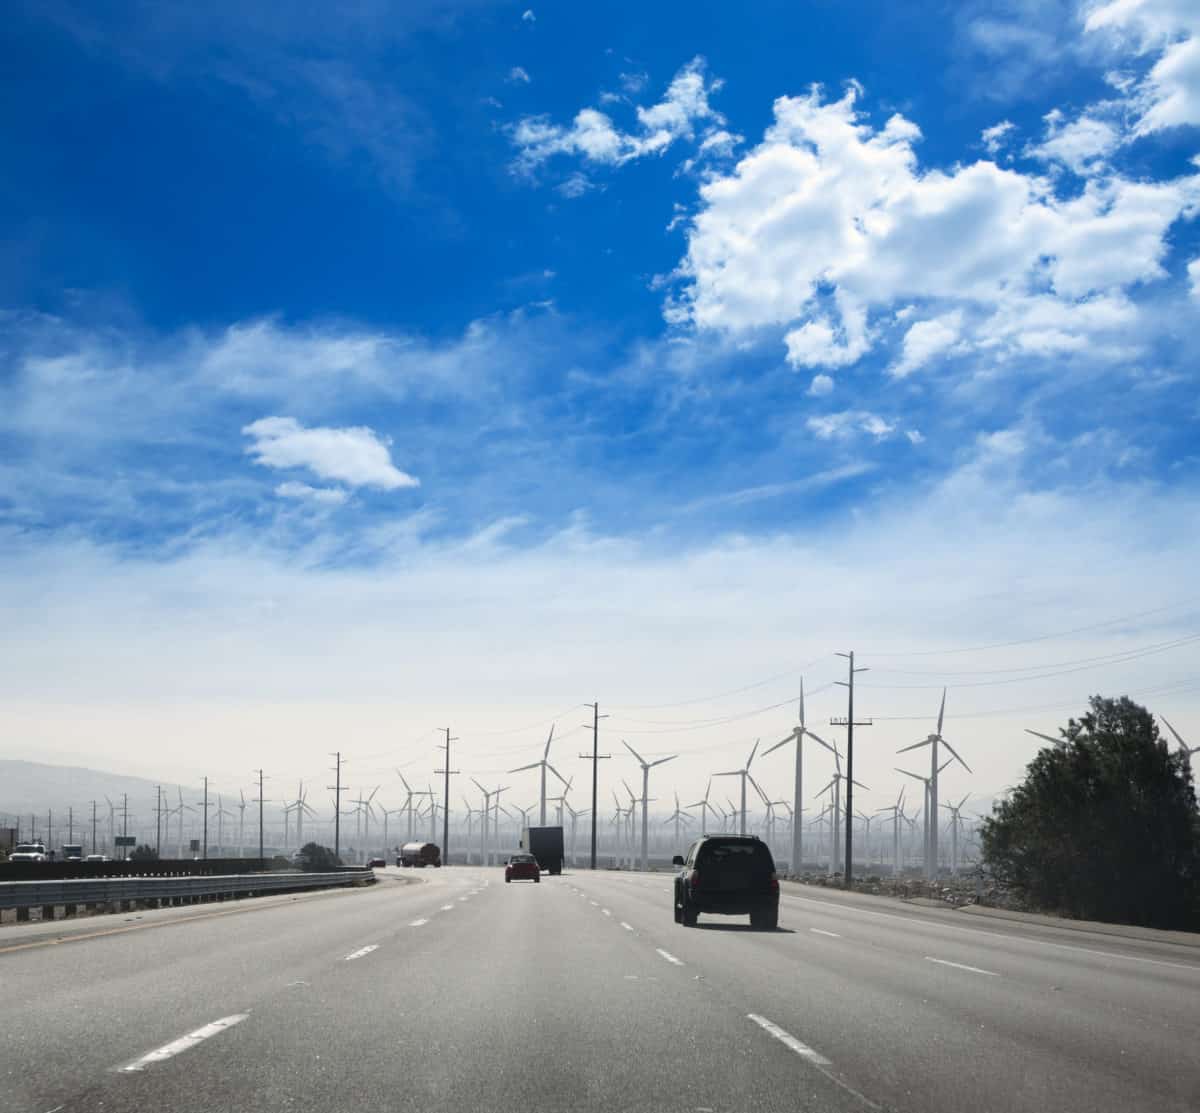 California Road With Electric Windmills Aerogenerators And Traffic. - California View